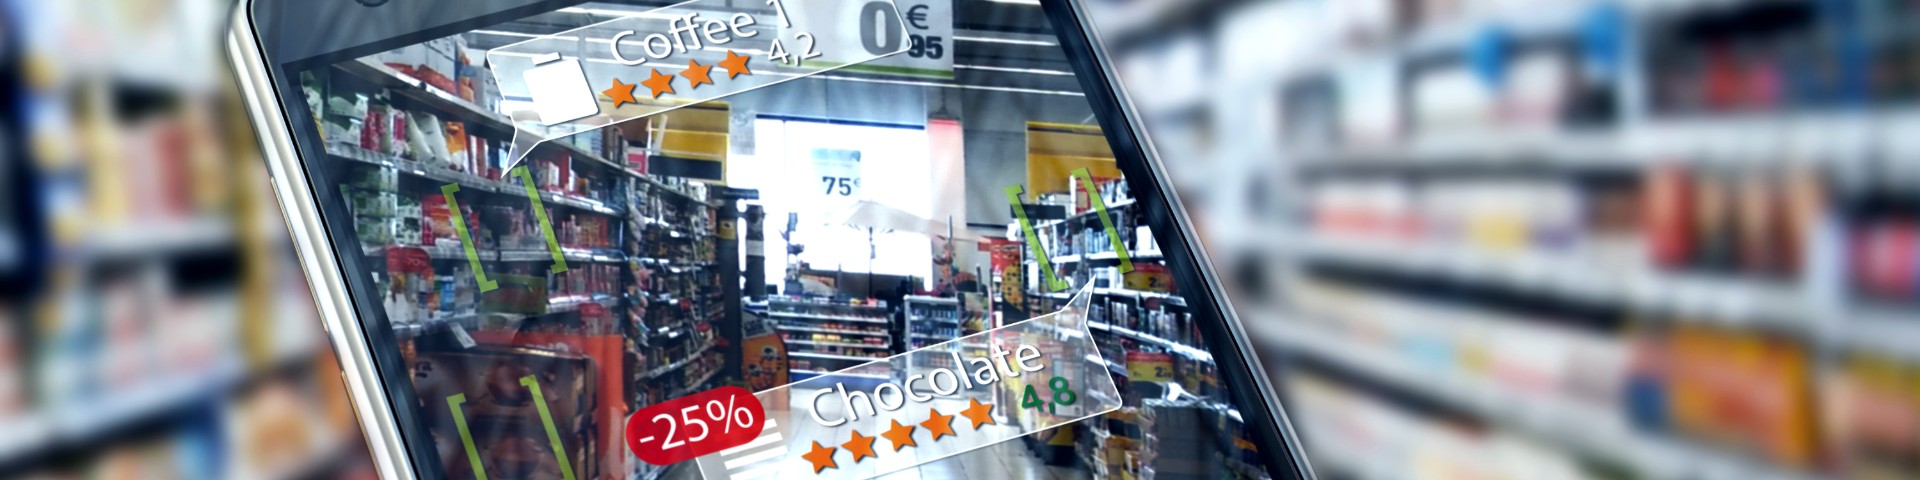 Screen of smartphone in supermarket in camera view